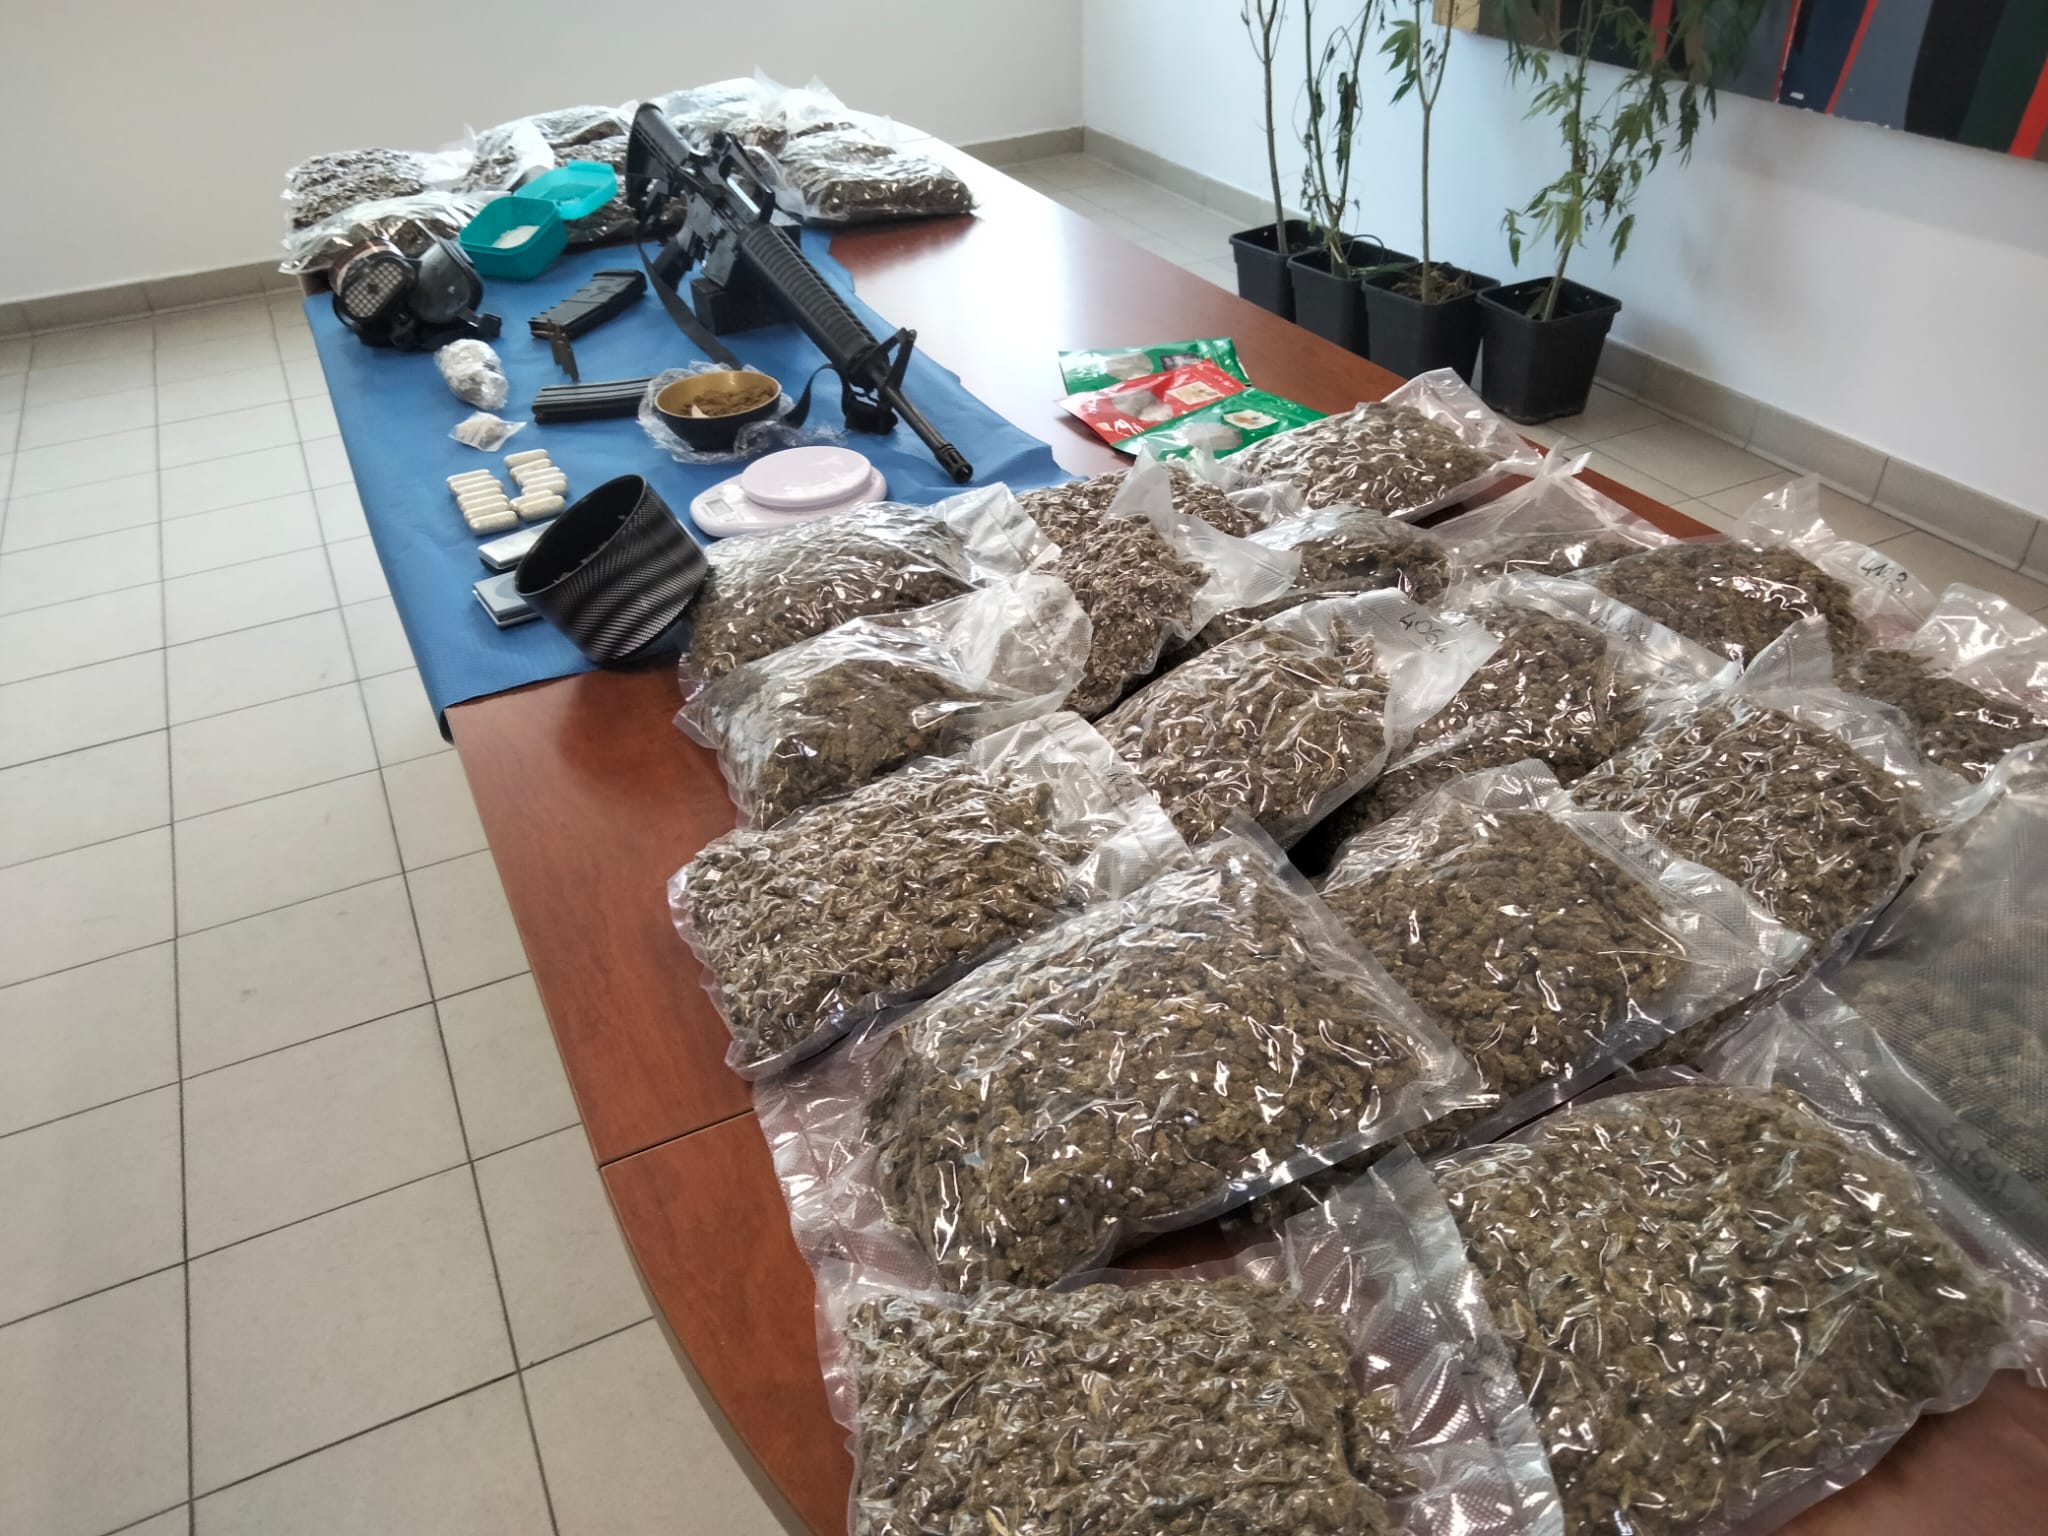 marijuana e armi trovate dai Carabinieri